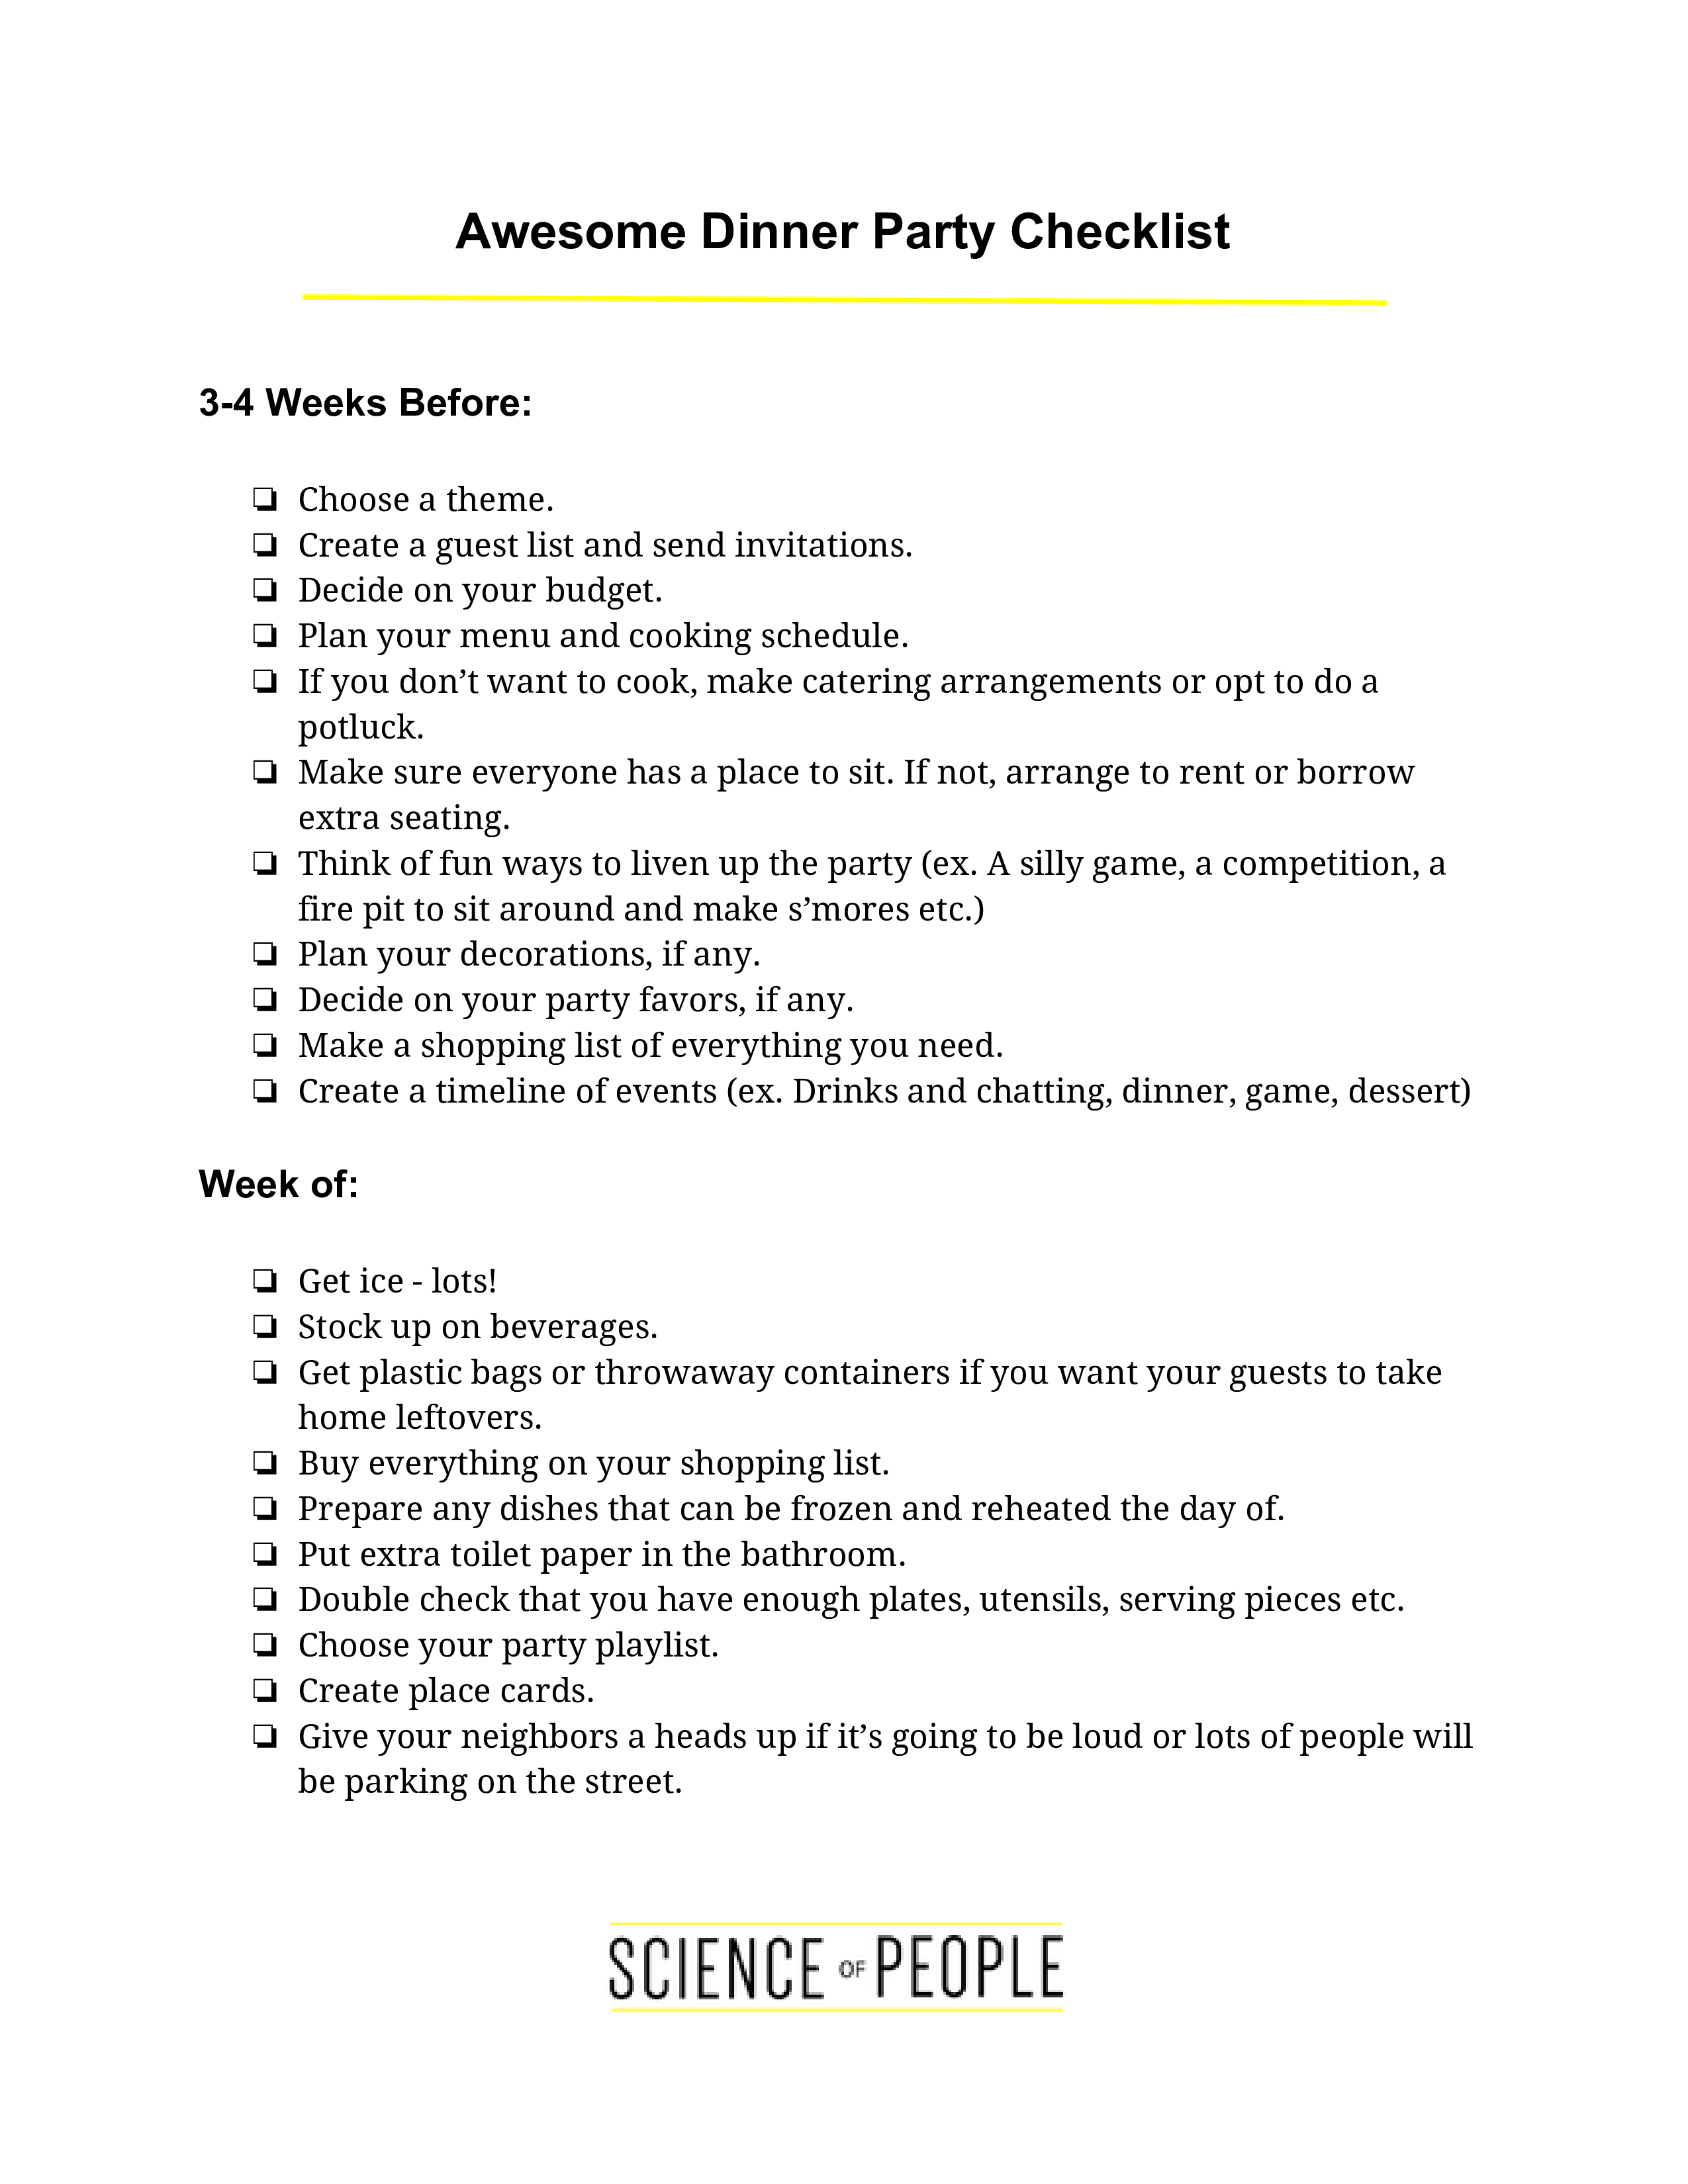 awesome dinner party checklist plantilla imagen principal